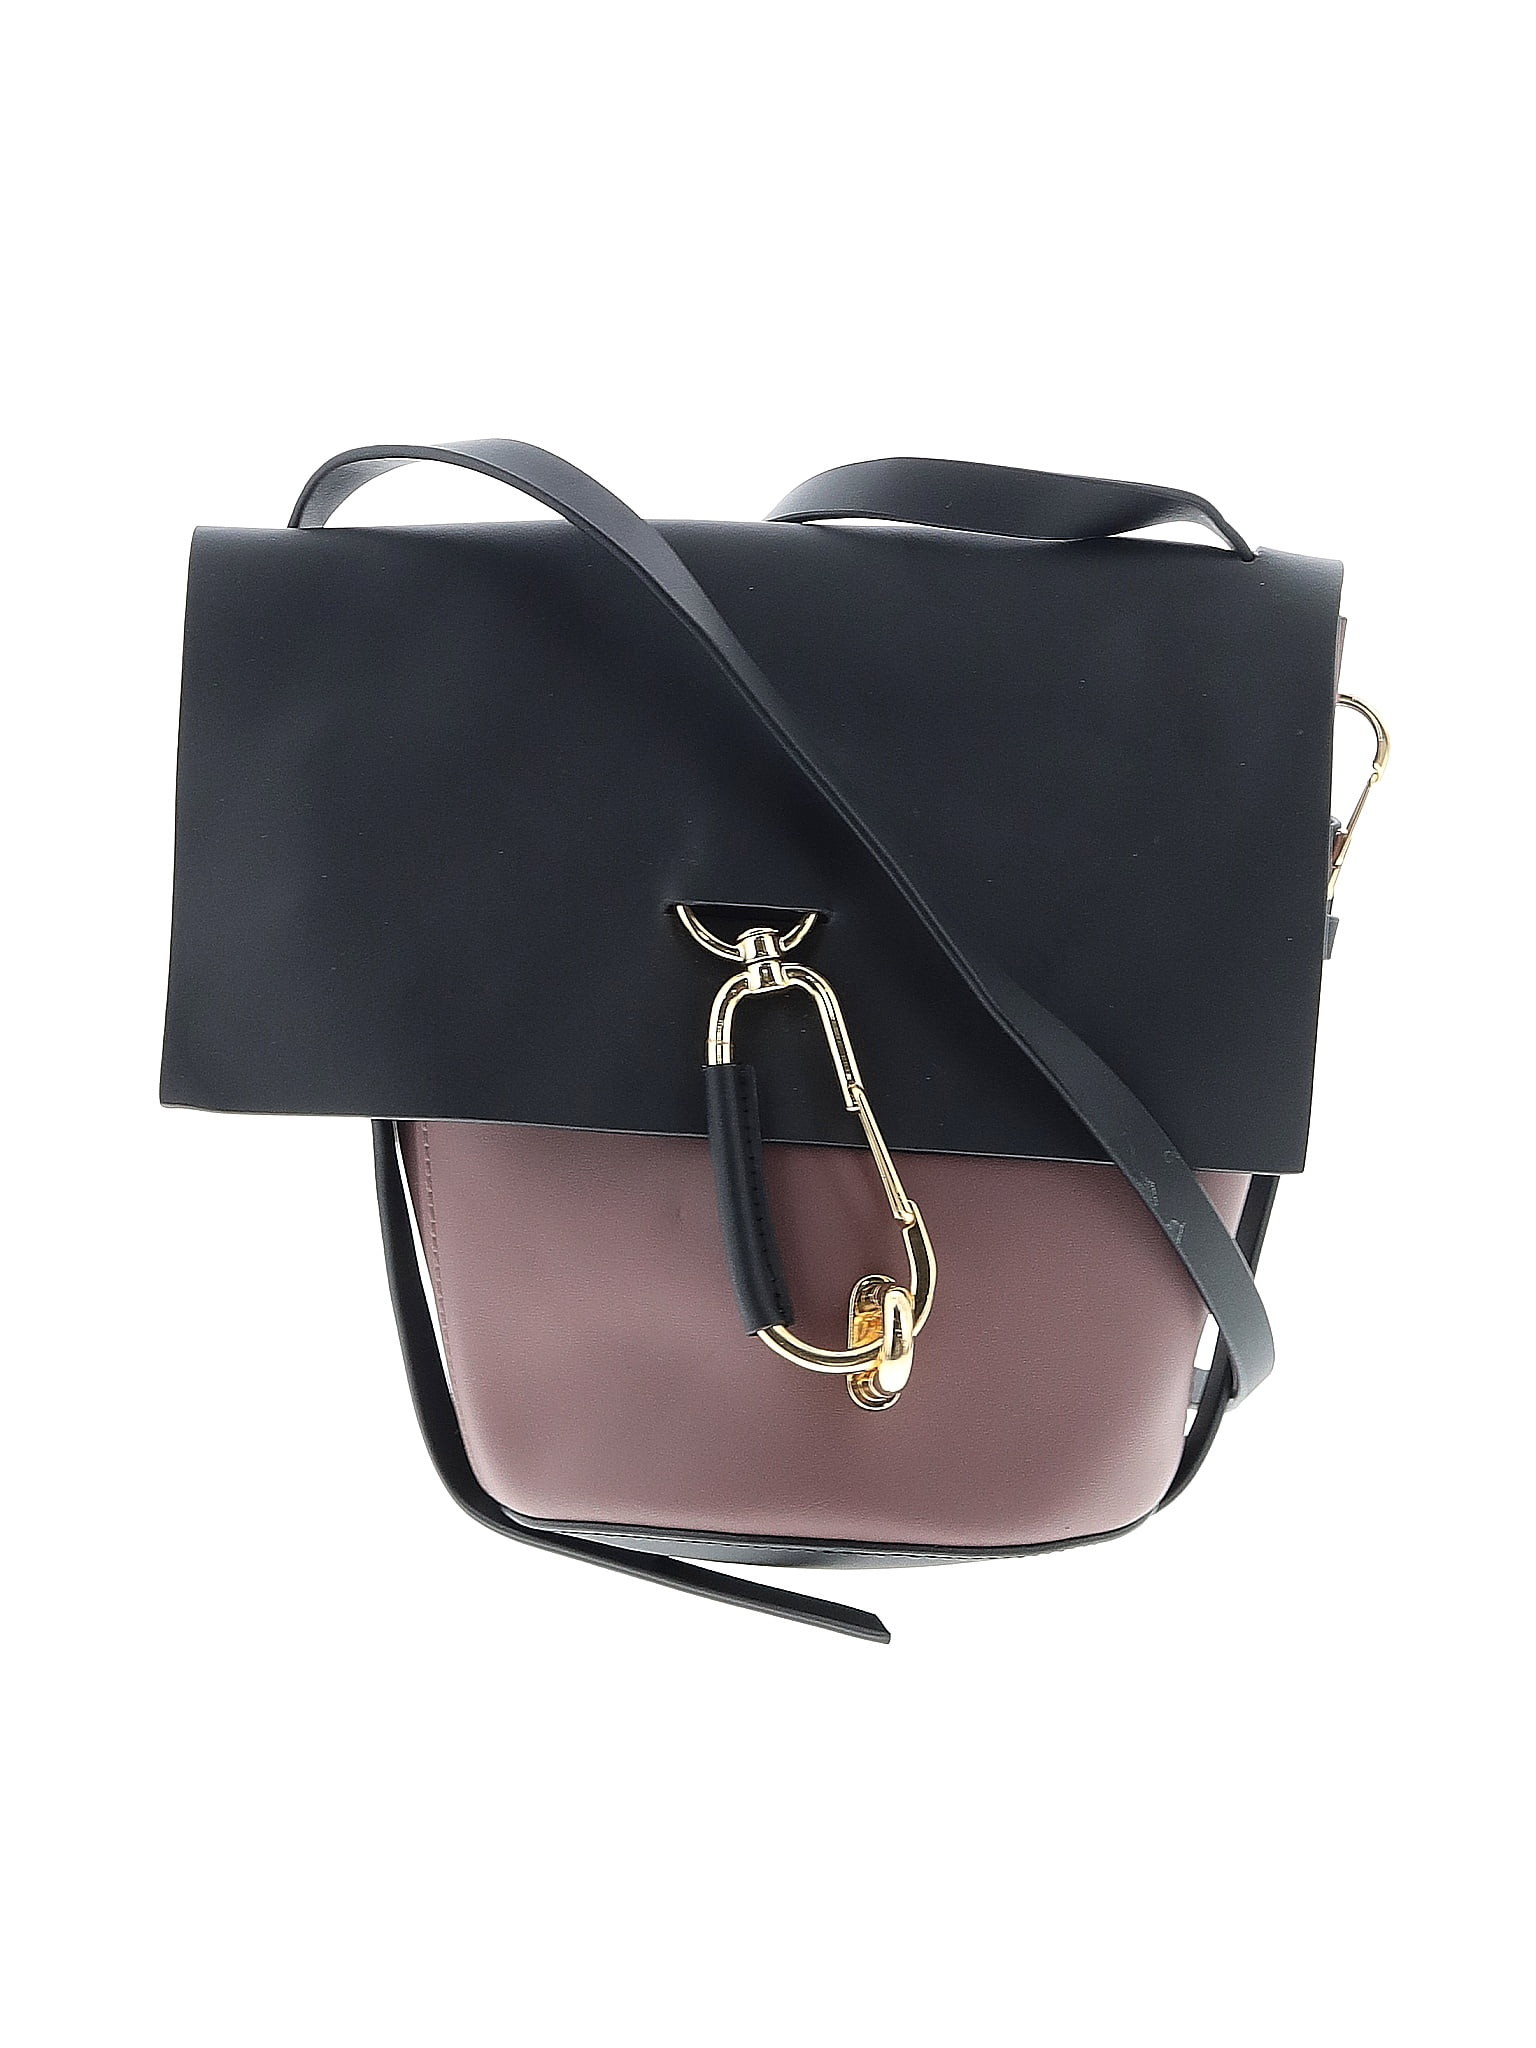 Zac Posen - Authenticated Handbag - Leather Pink Plain for Women, Never Worn